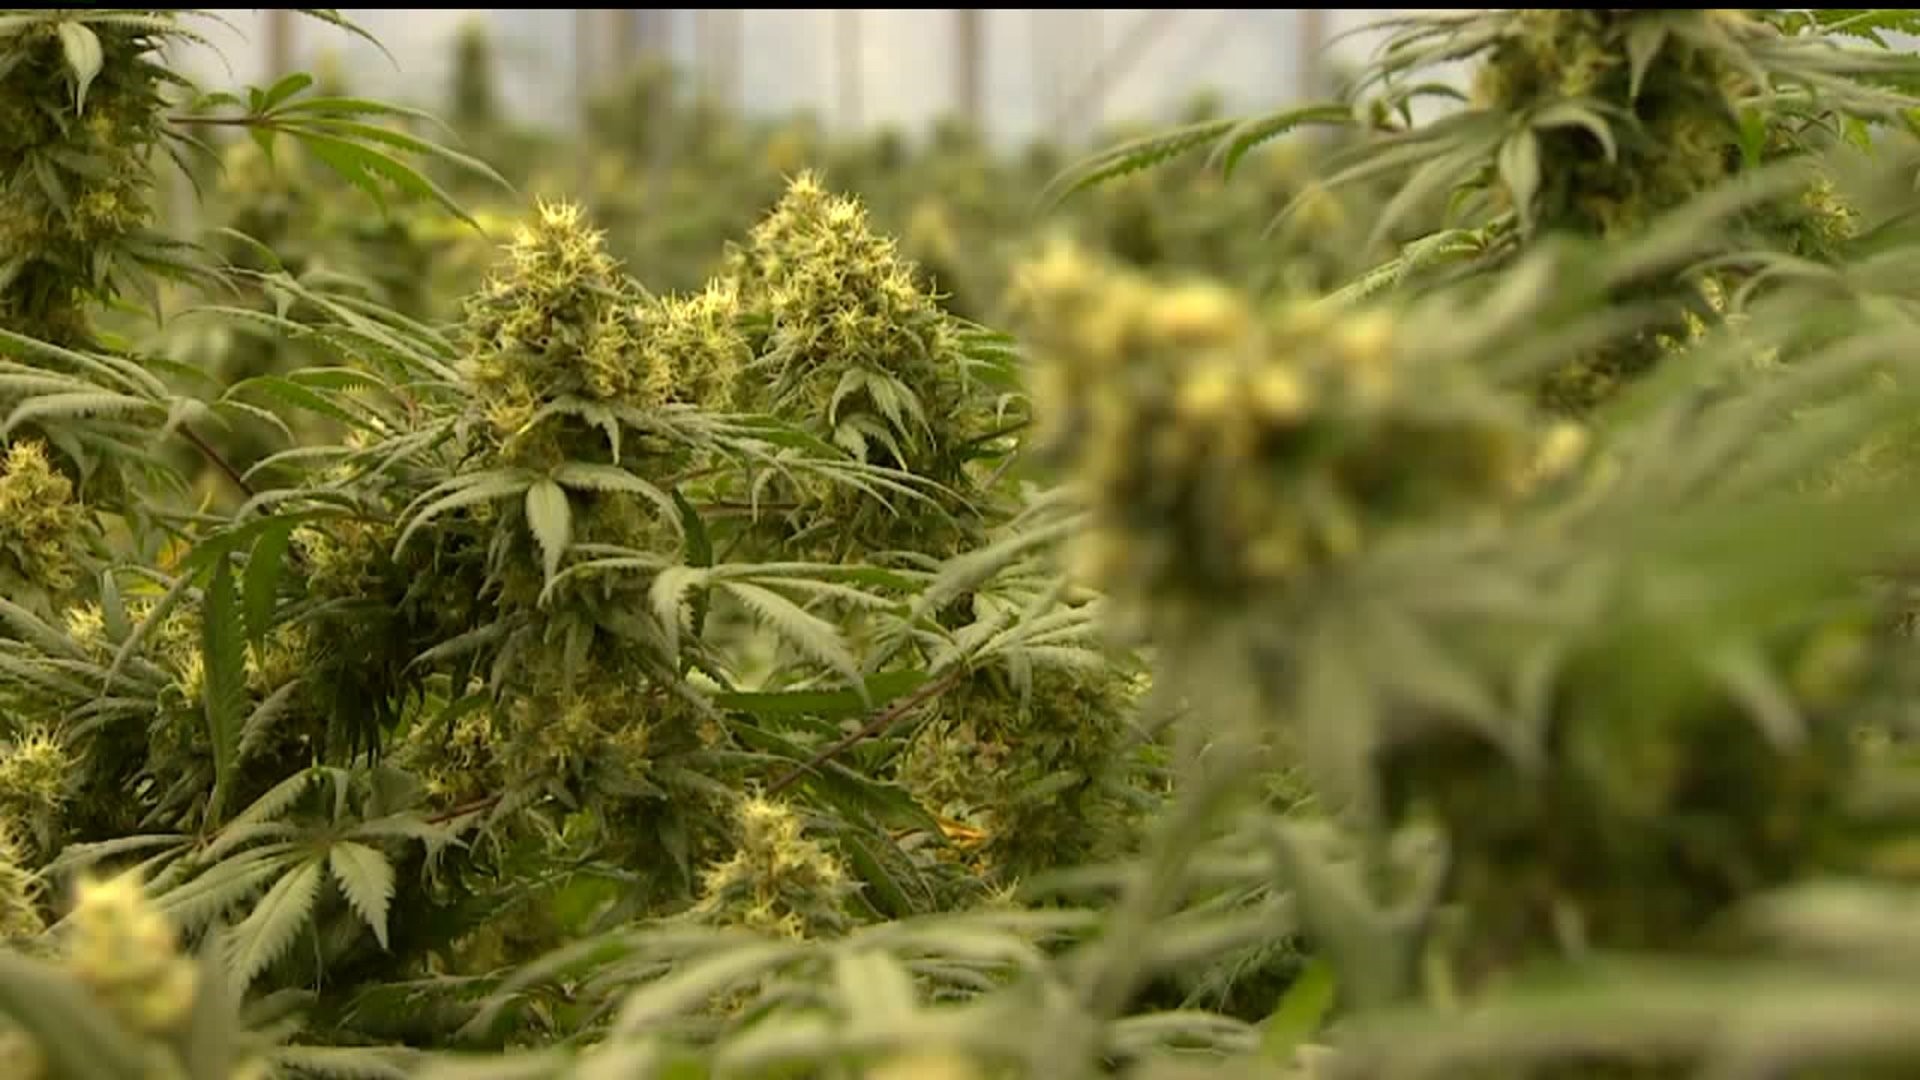 Marijuana Dispensary might be coming to Davenport